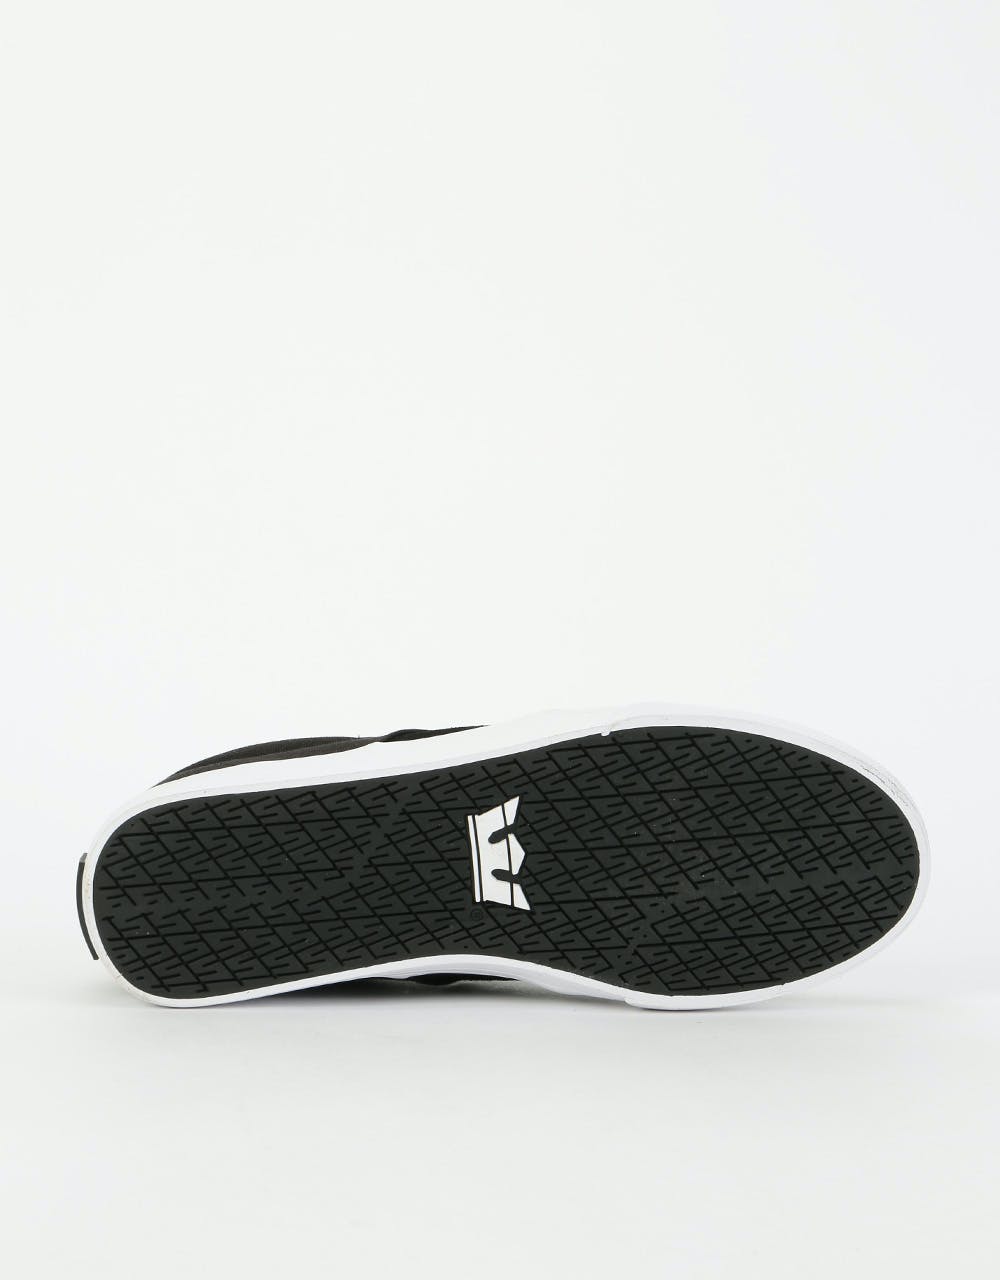 Supra Stacks Vulc II Skate Shoes - Black/Black-White